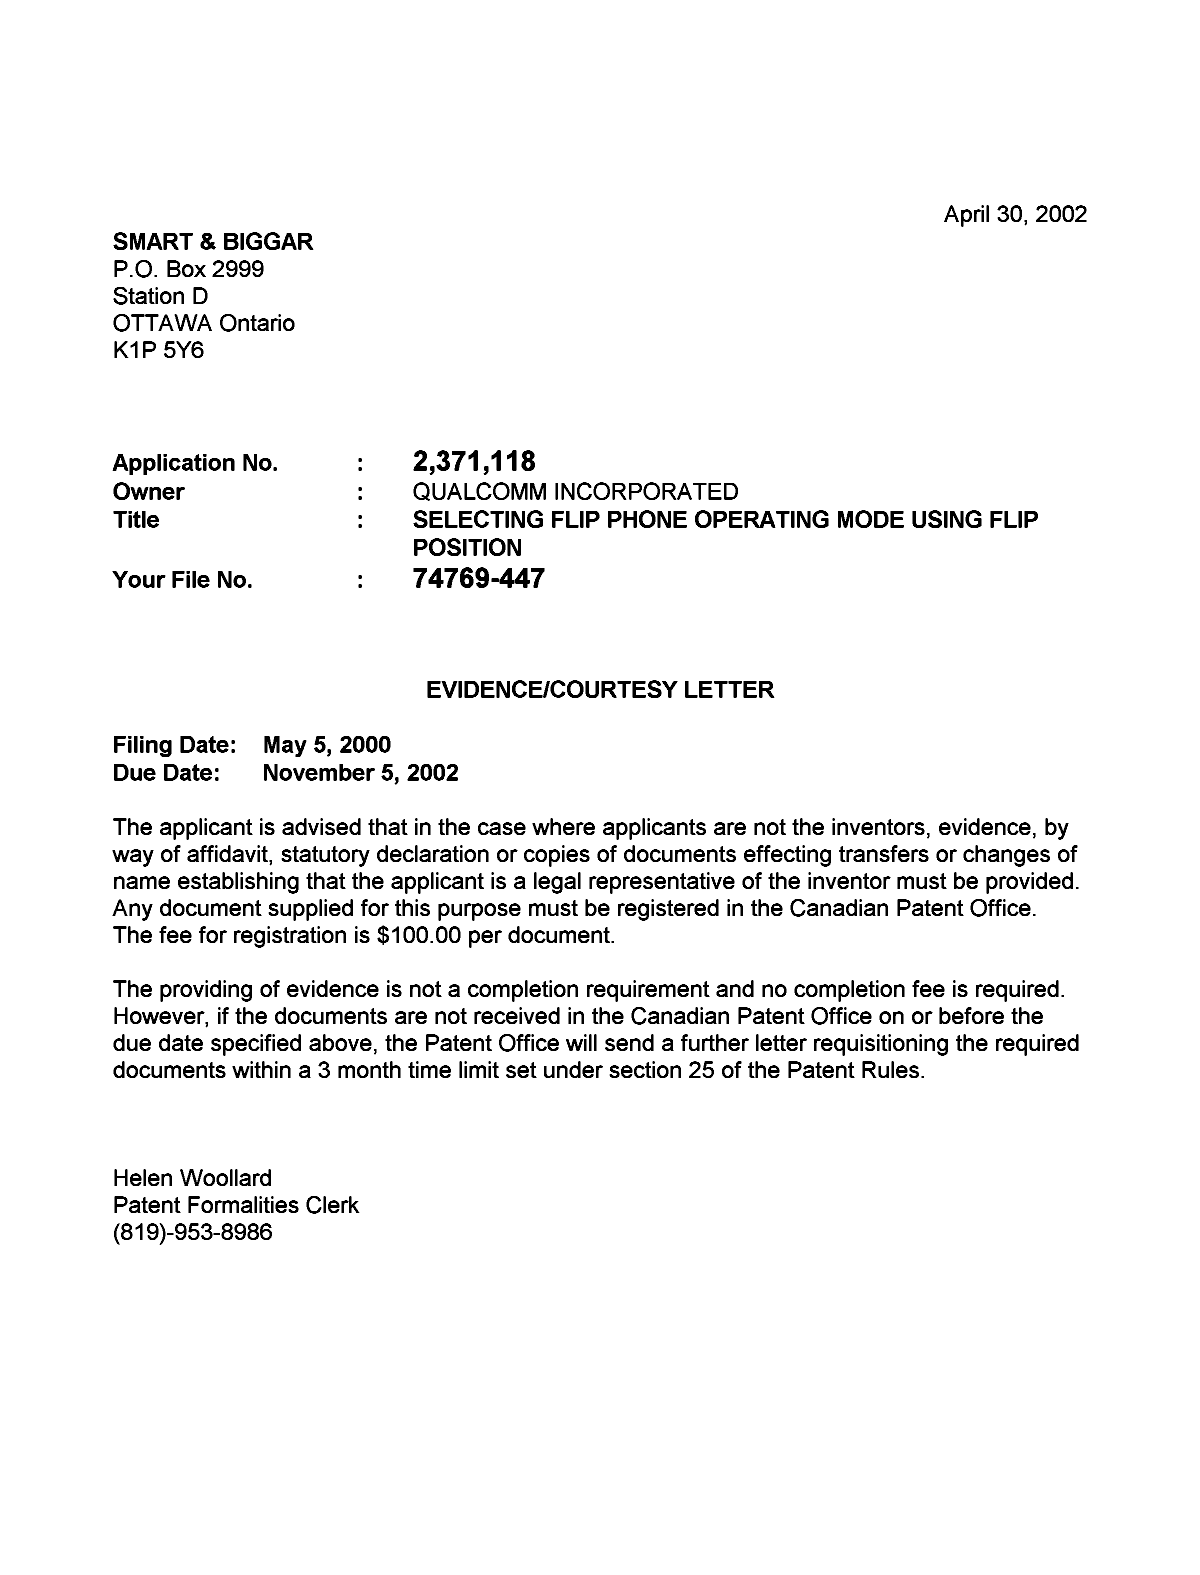 Canadian Patent Document 2371118. Correspondence 20001202. Image 1 of 1